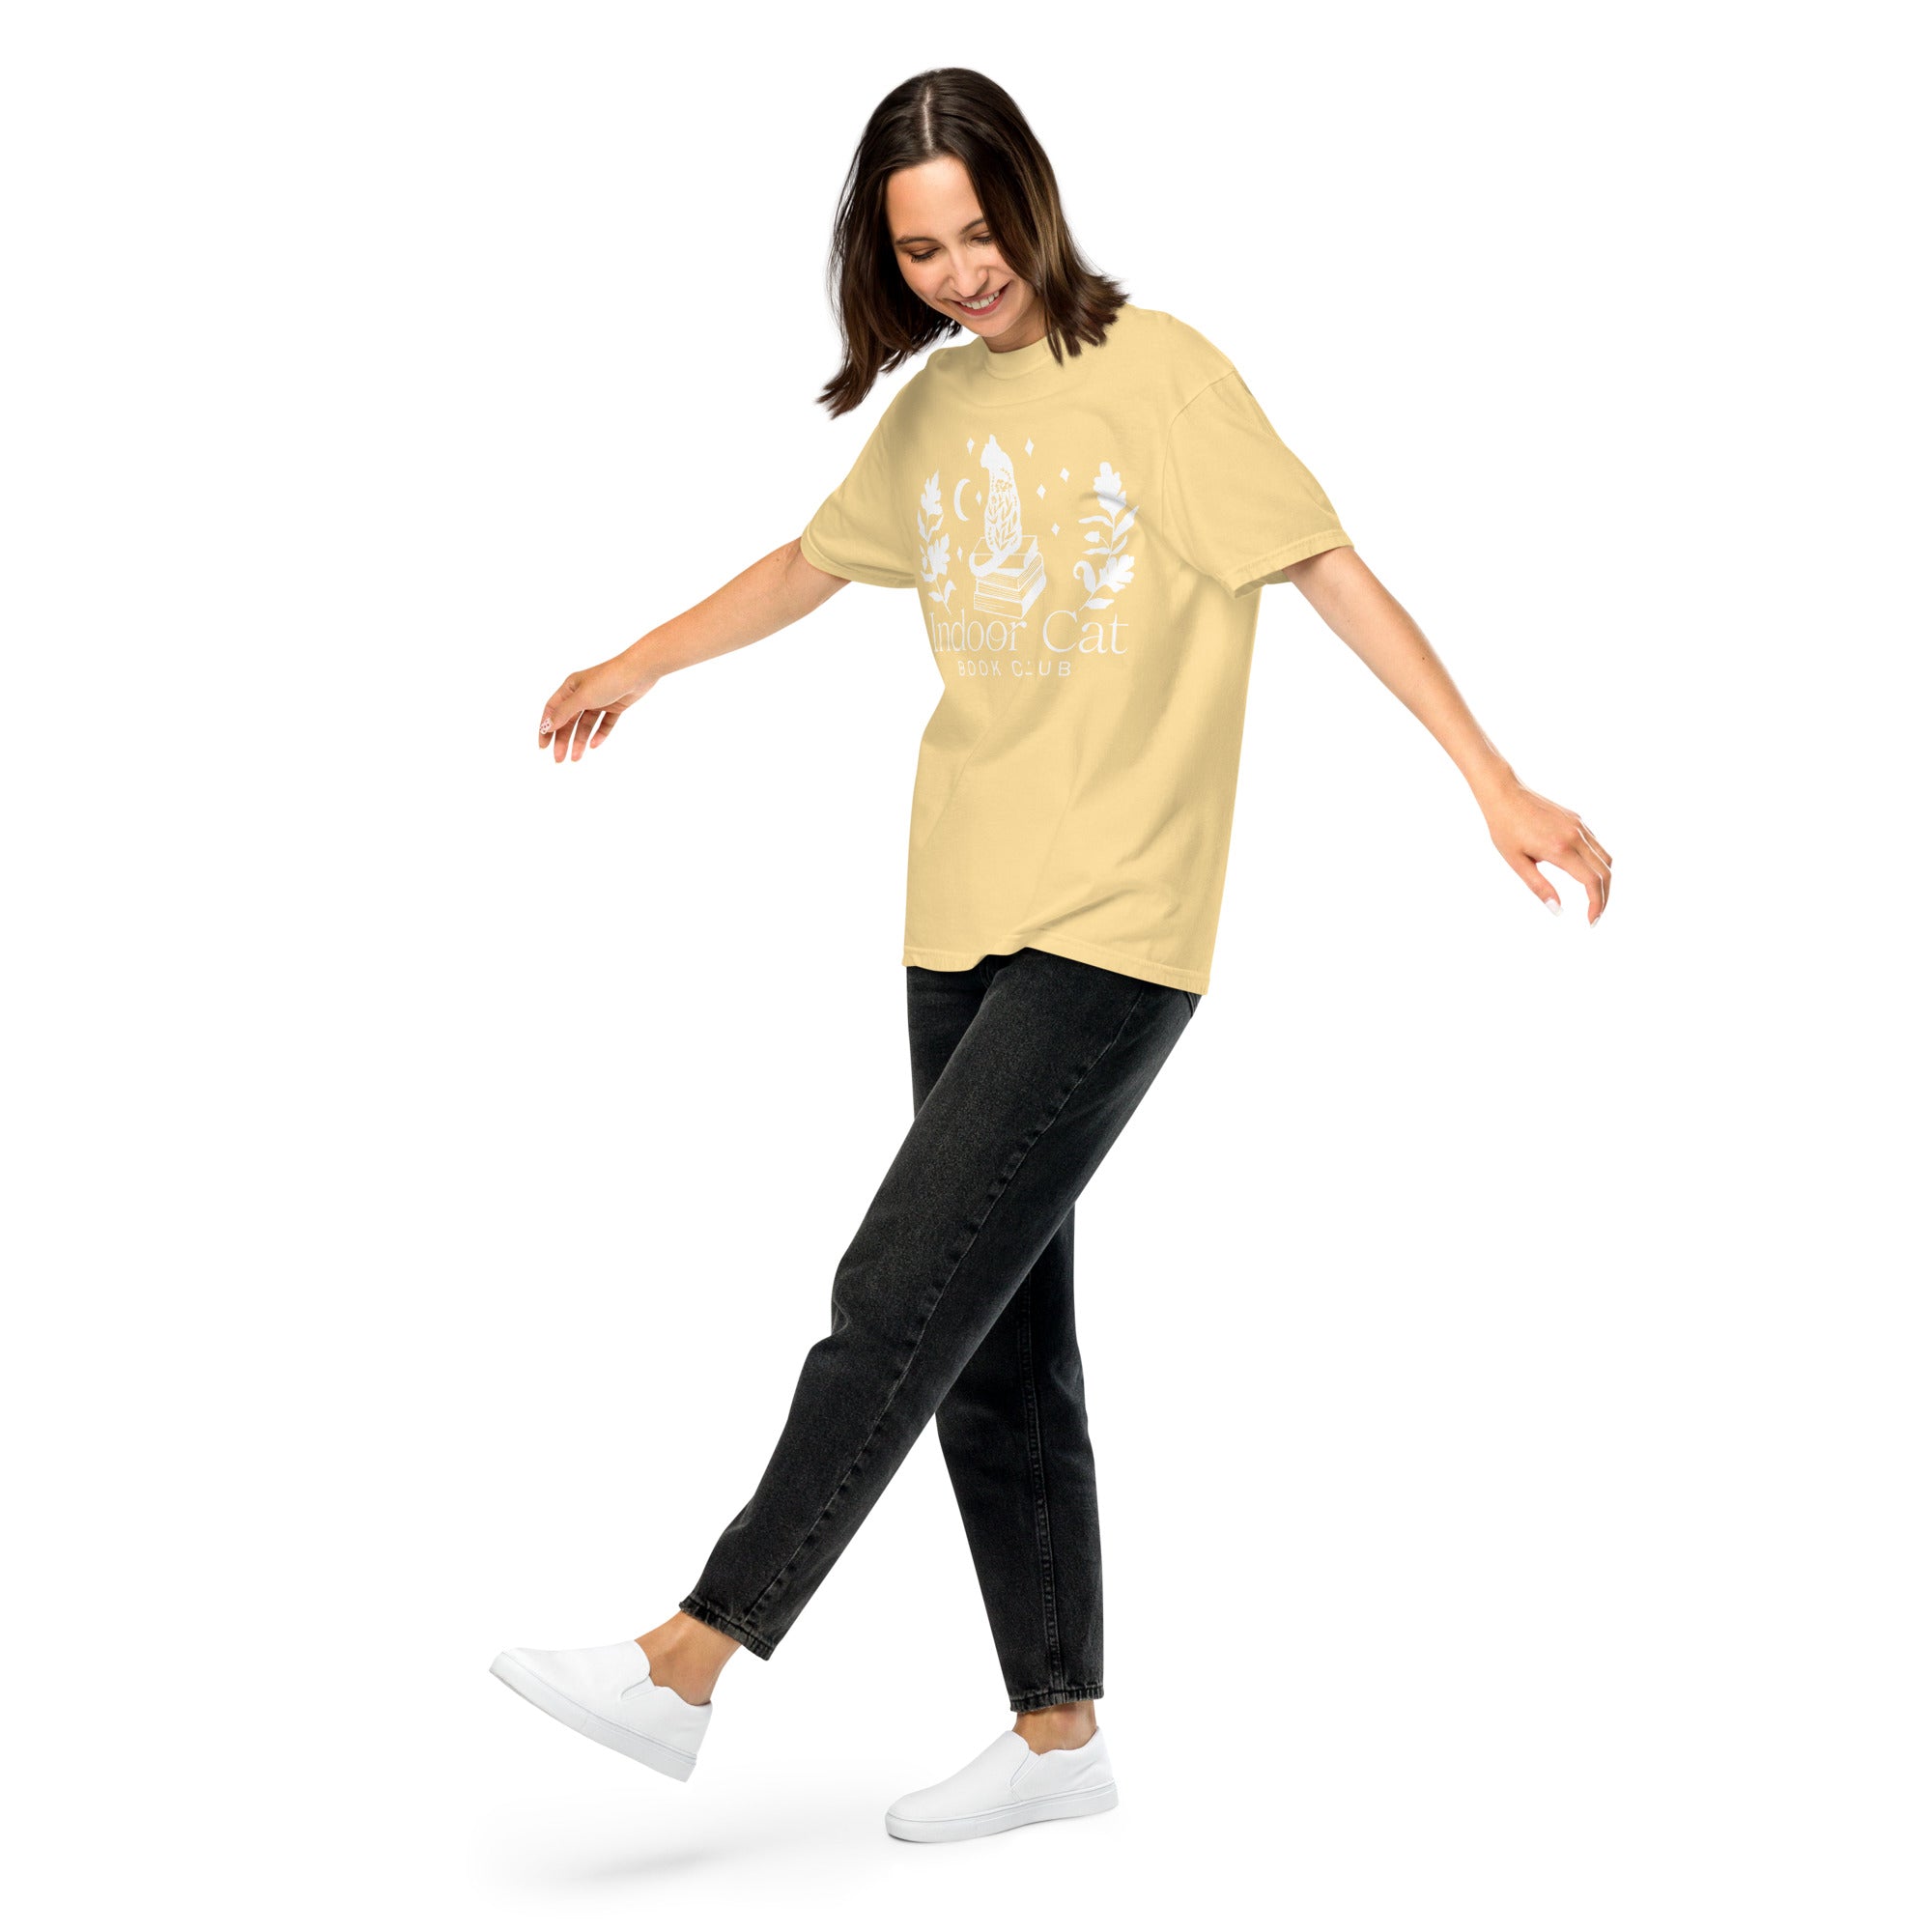 FireDrake Artistry™ Indoor Cat t-shirt, comfort colors brand in butter, white design